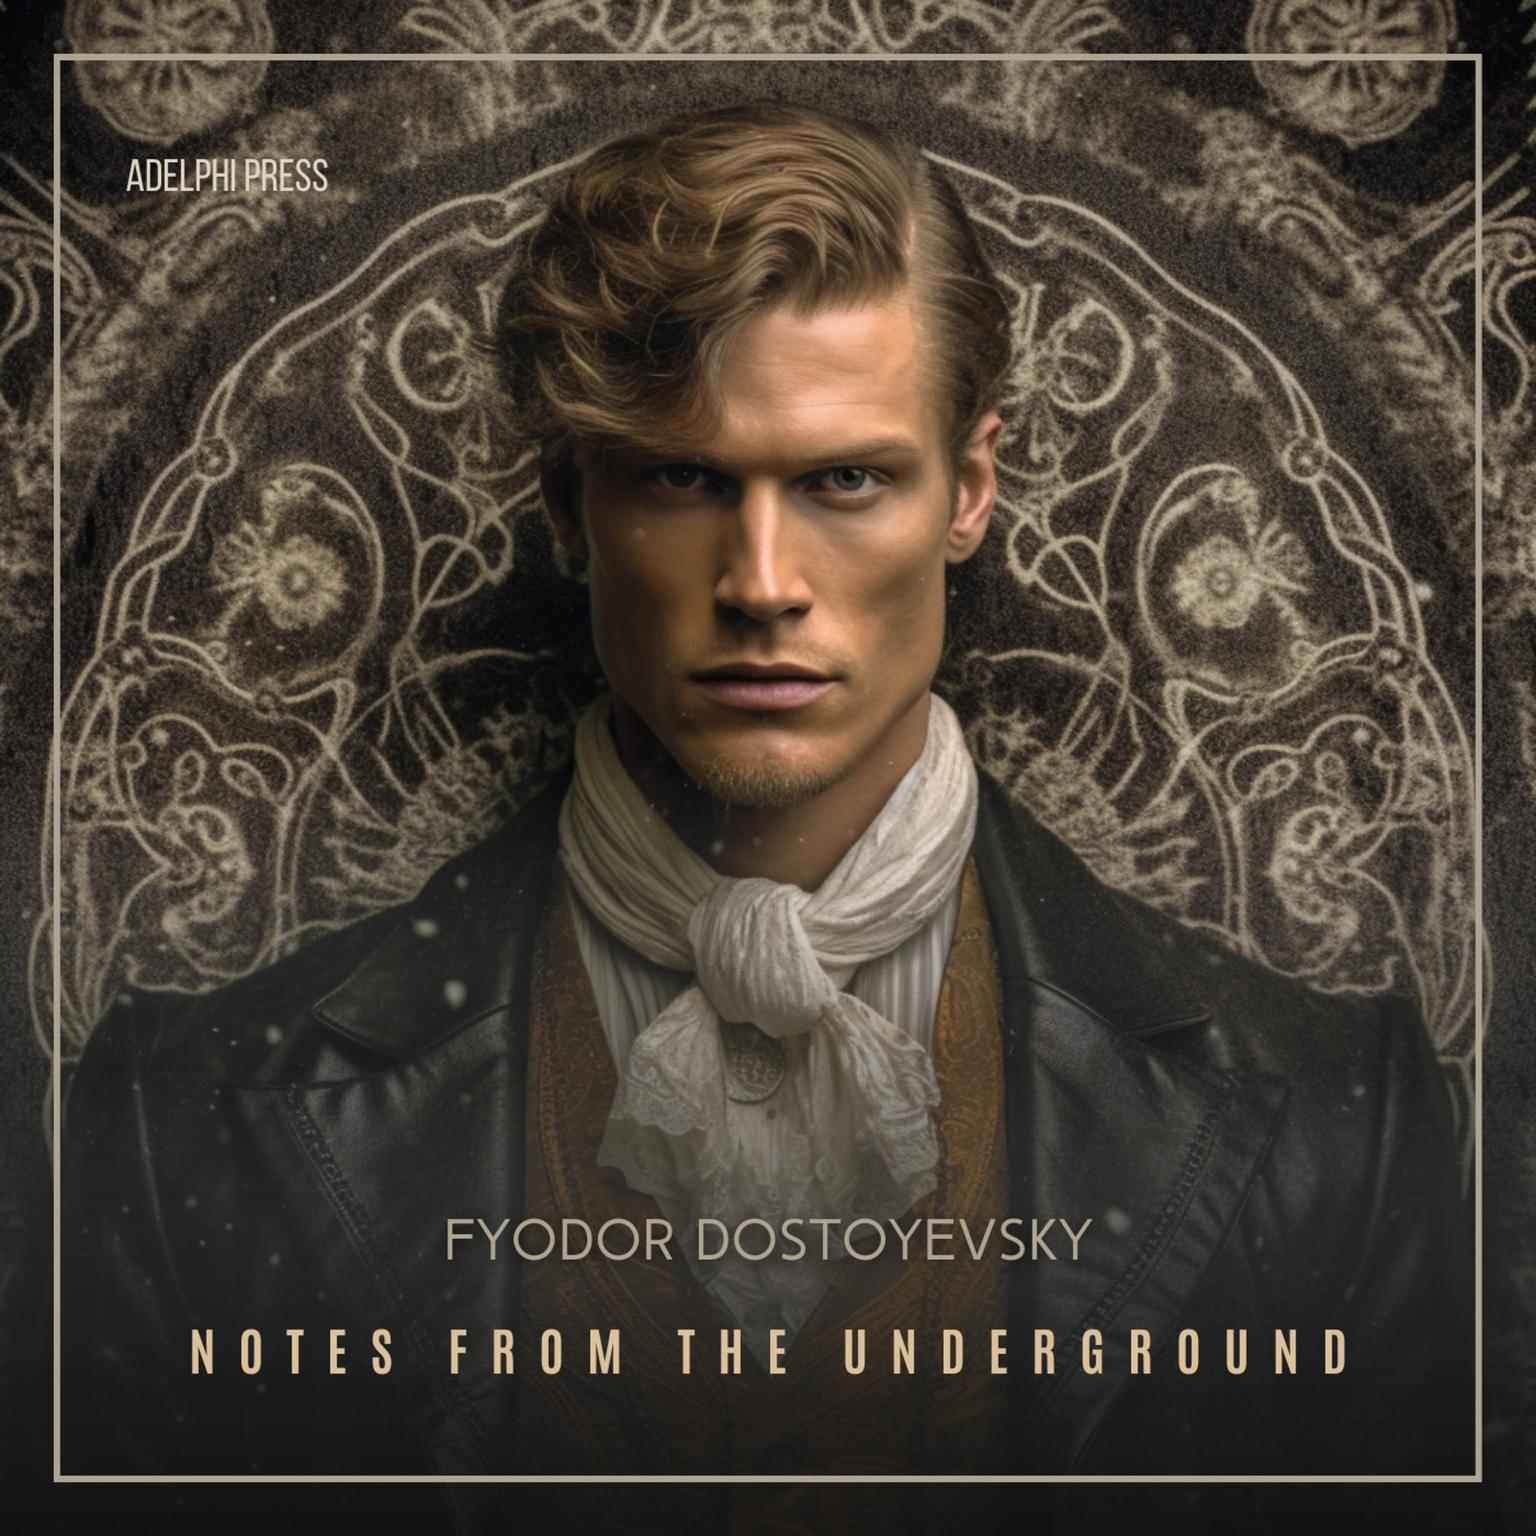 Notes From The Underground Audiobook, by Fyodor Dostoyevsky